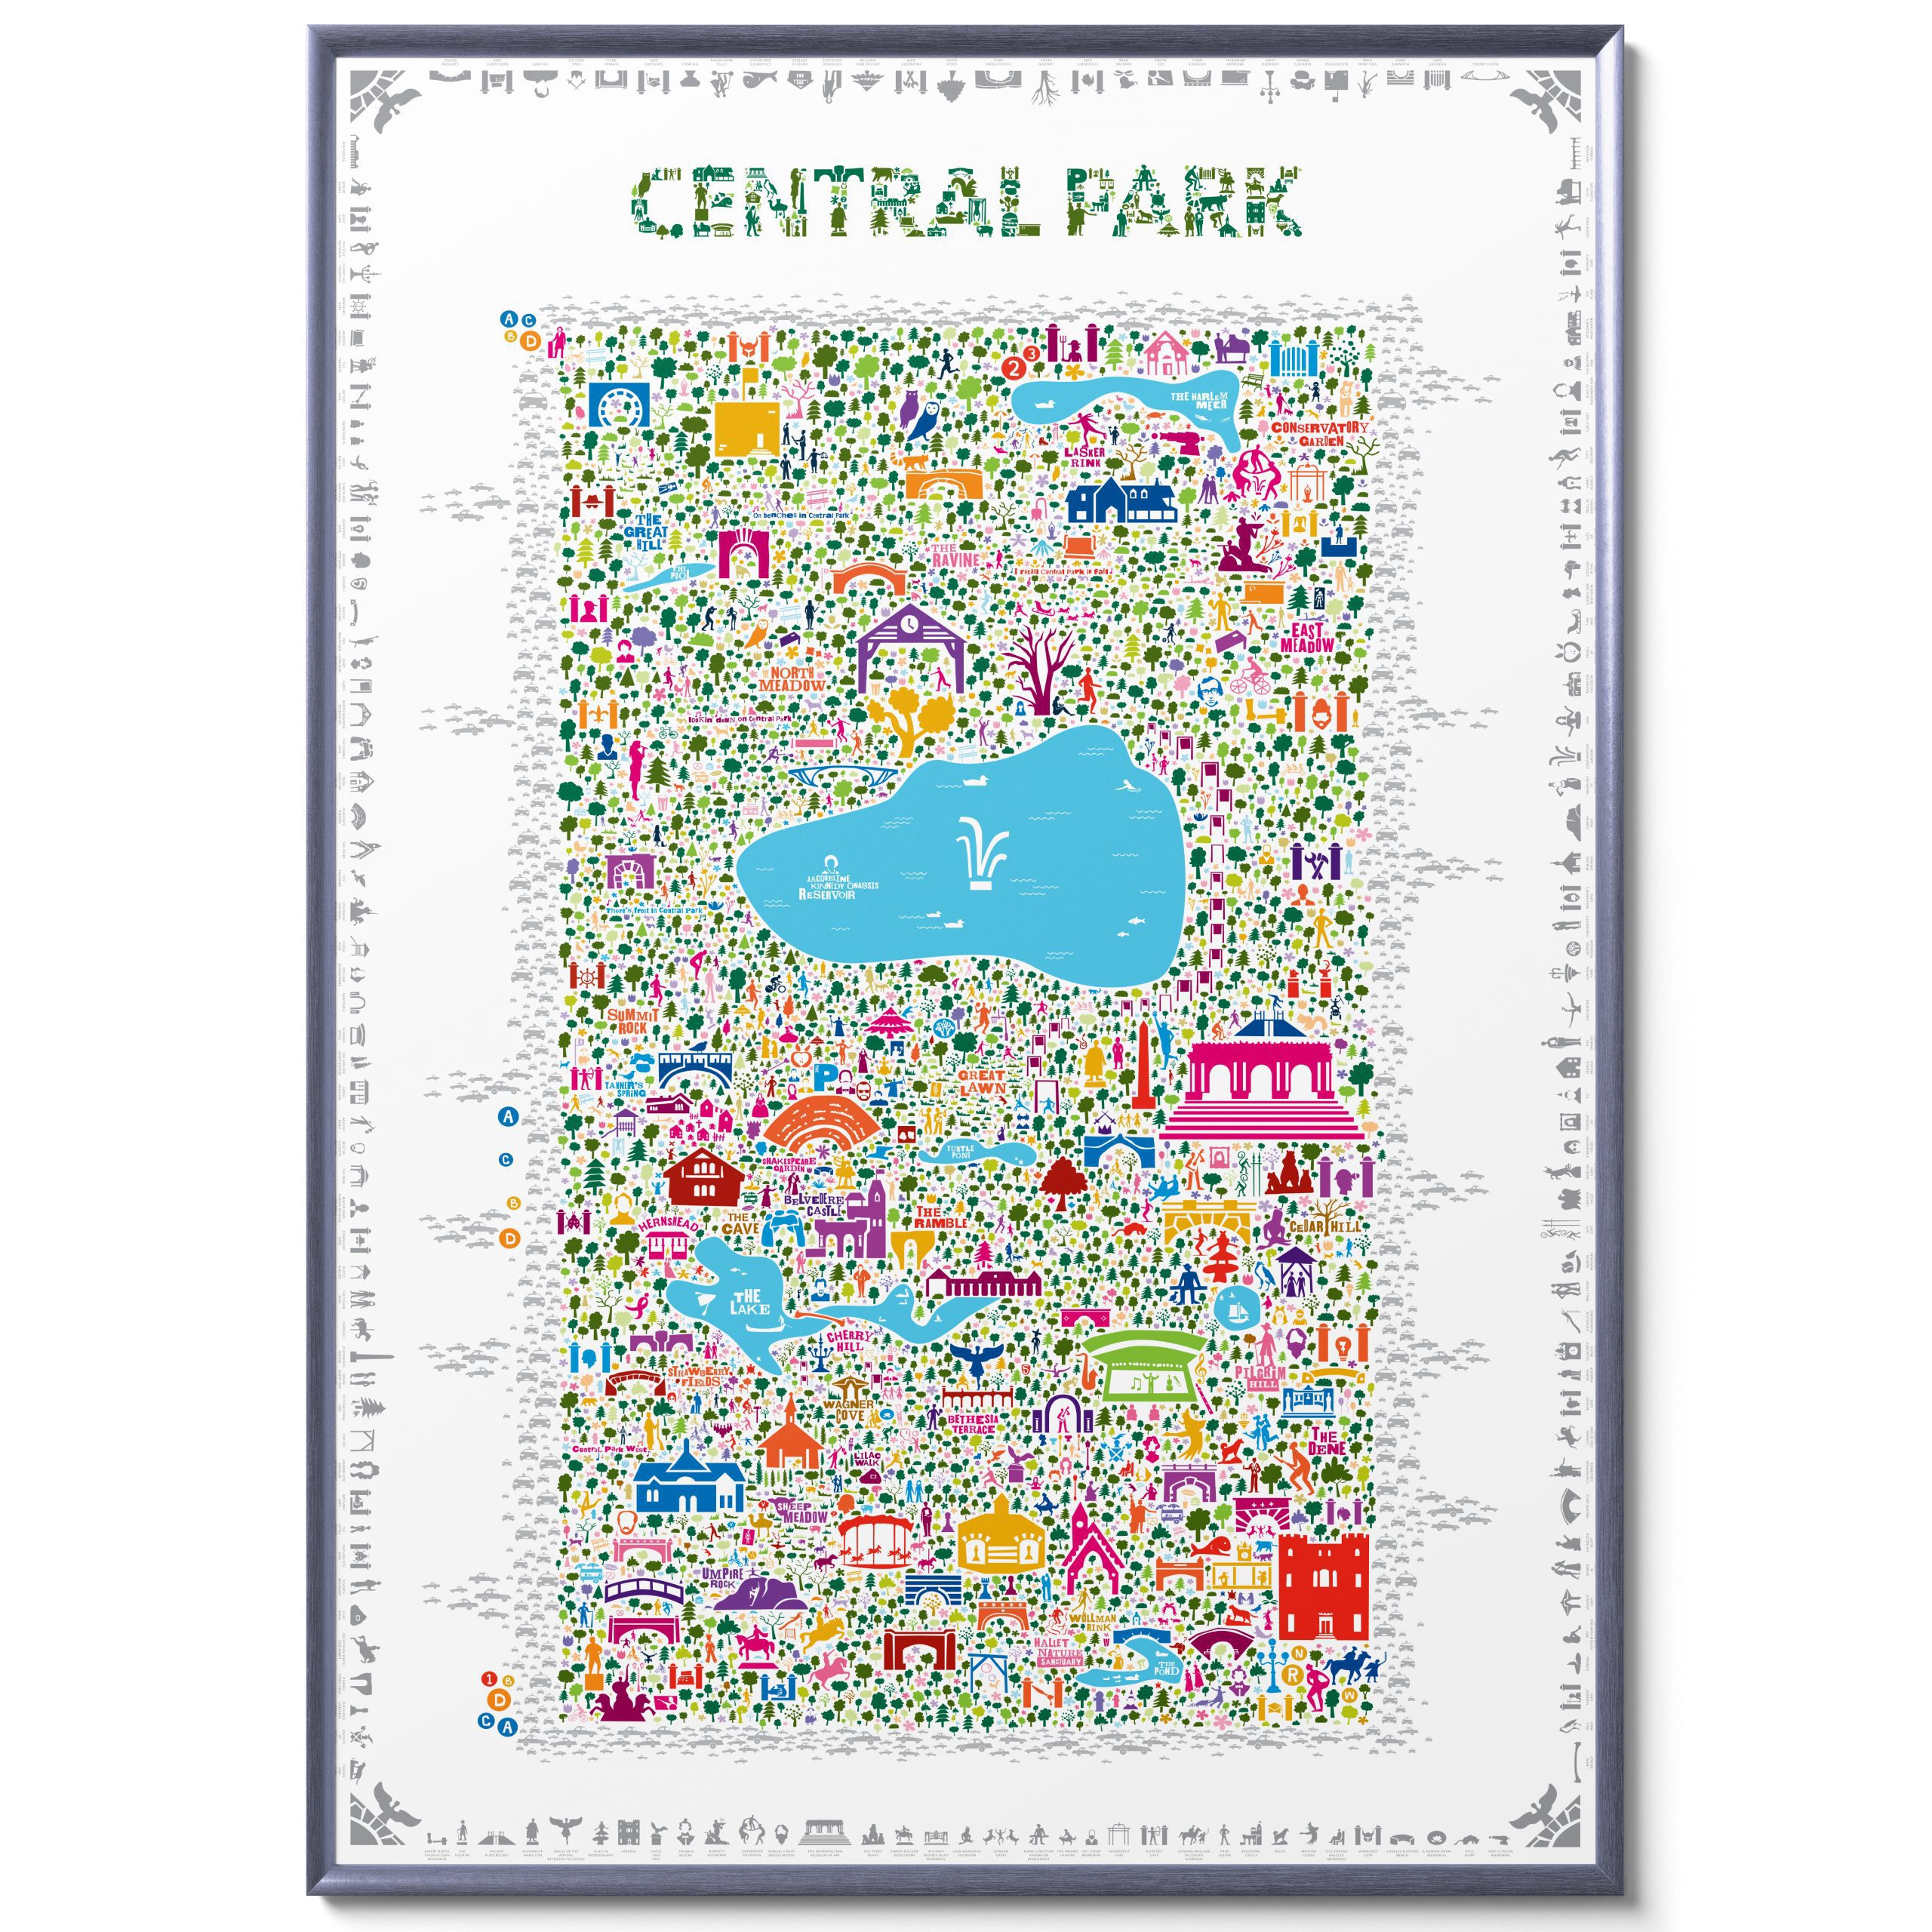 01_Alfalfa_New_York_Iconic_central_park_wall_art_poster_print_map_art_artprint